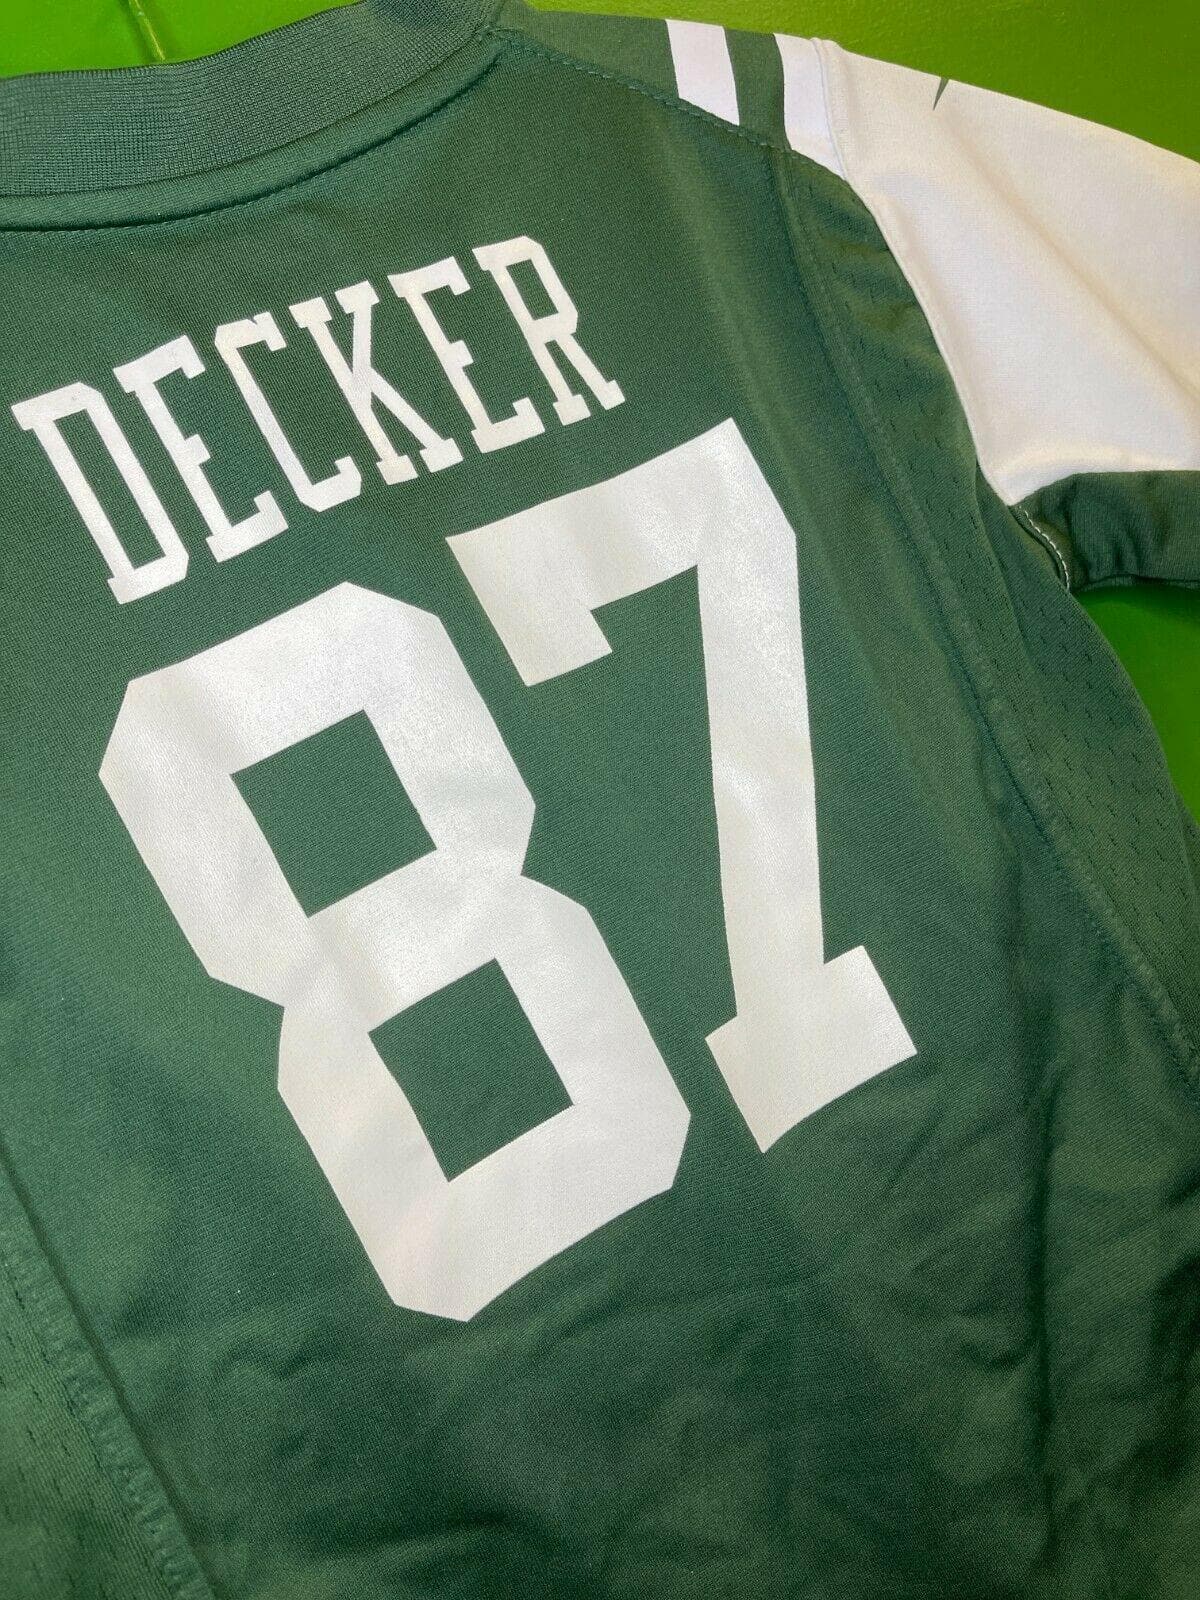 NFL New York Jets Eric Decker #87 Game Jersey Kids' Large 7